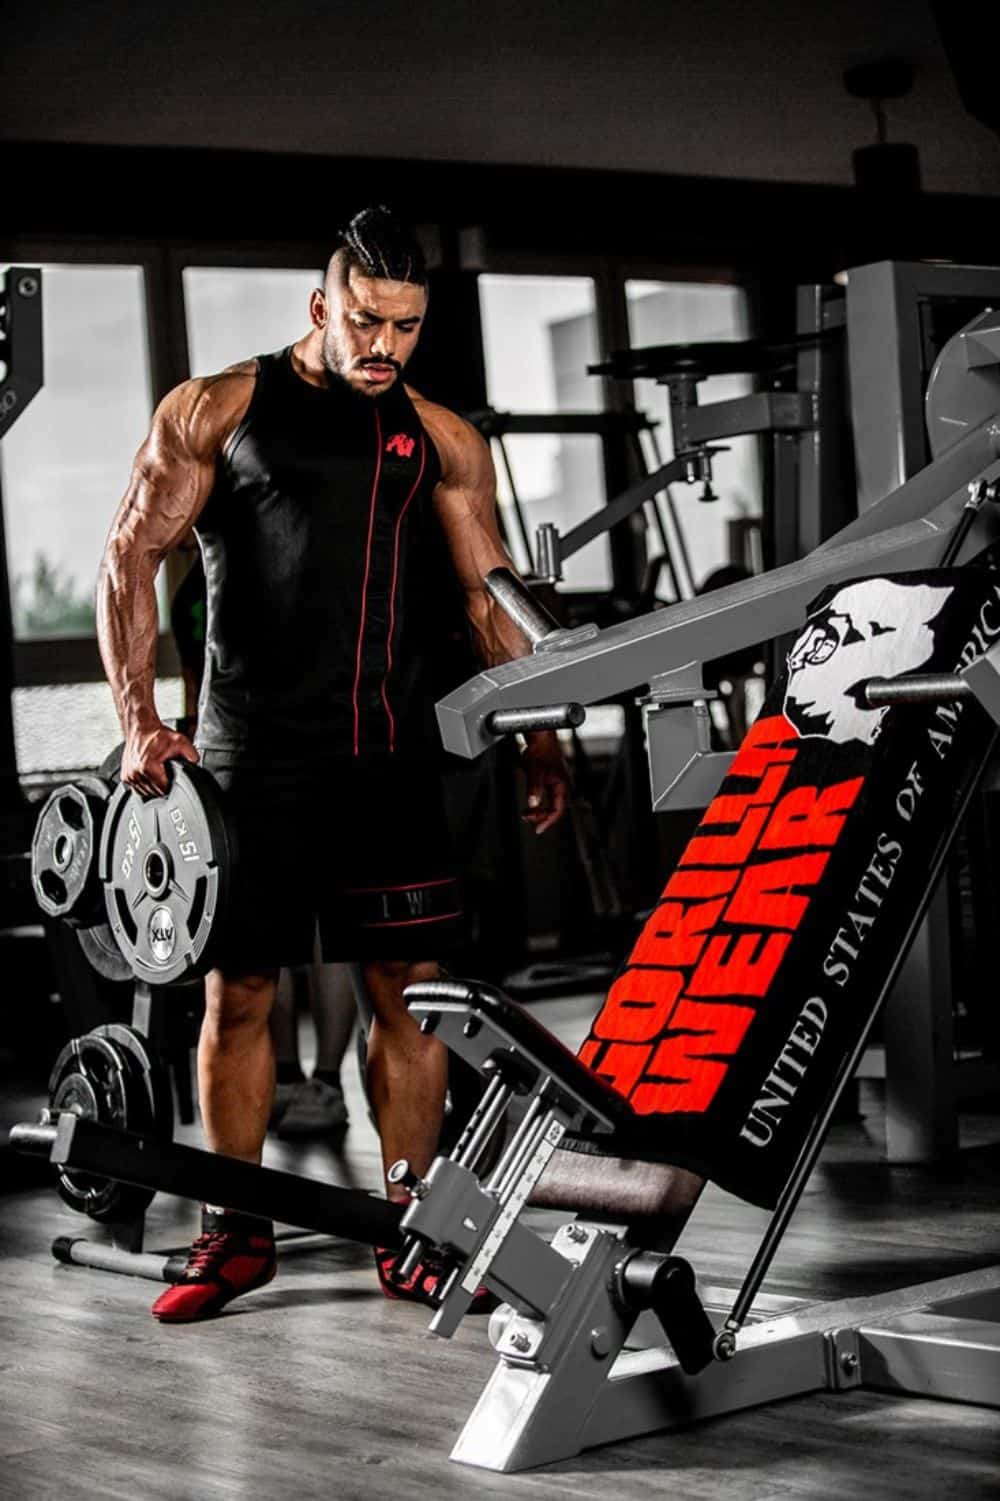 https://gorillawearaustralia.com.au/wp-content/uploads/2021/02/Branson-GorillaWear-Tank-Top-singlet-weightlifting-bodybuilding-gym-sports-MMA-crossfit-fitness-training-black-red-3.jpg